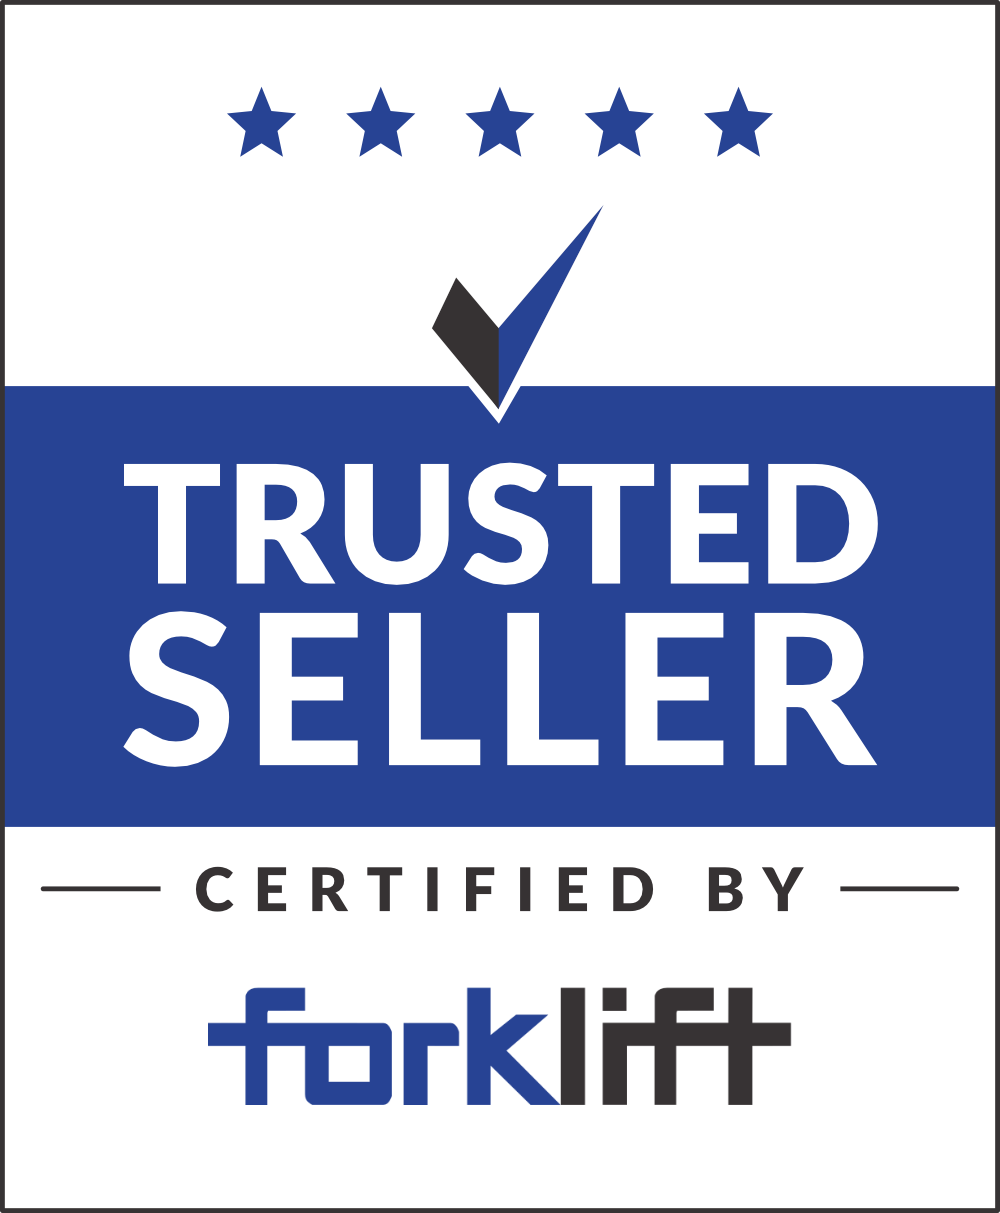 LIFTER Frdertechnik GmbH & Co. KG - Trusted Forklift Dealer